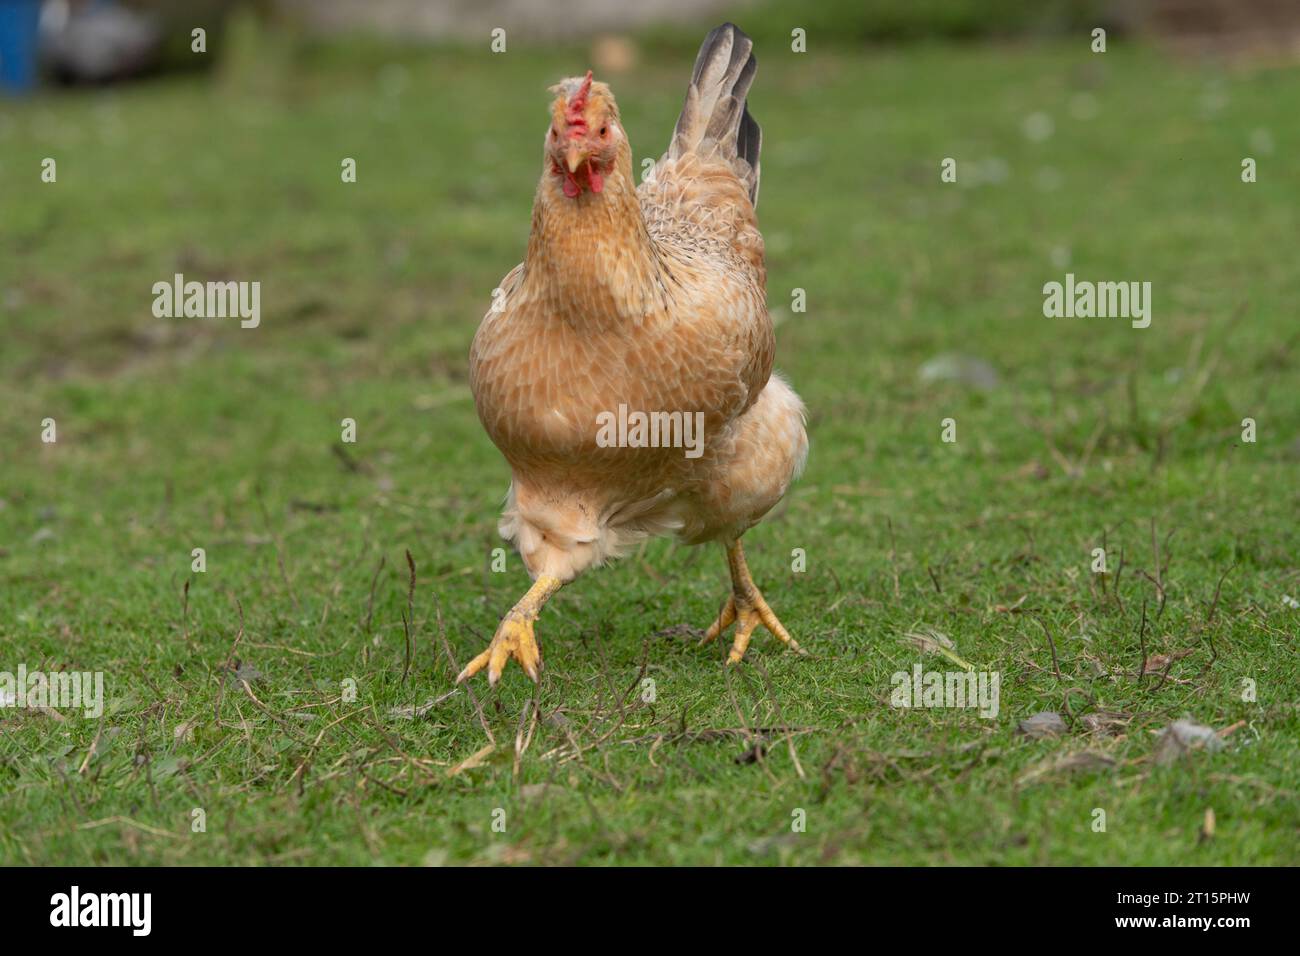 chicken running towards the camera Stock Photo